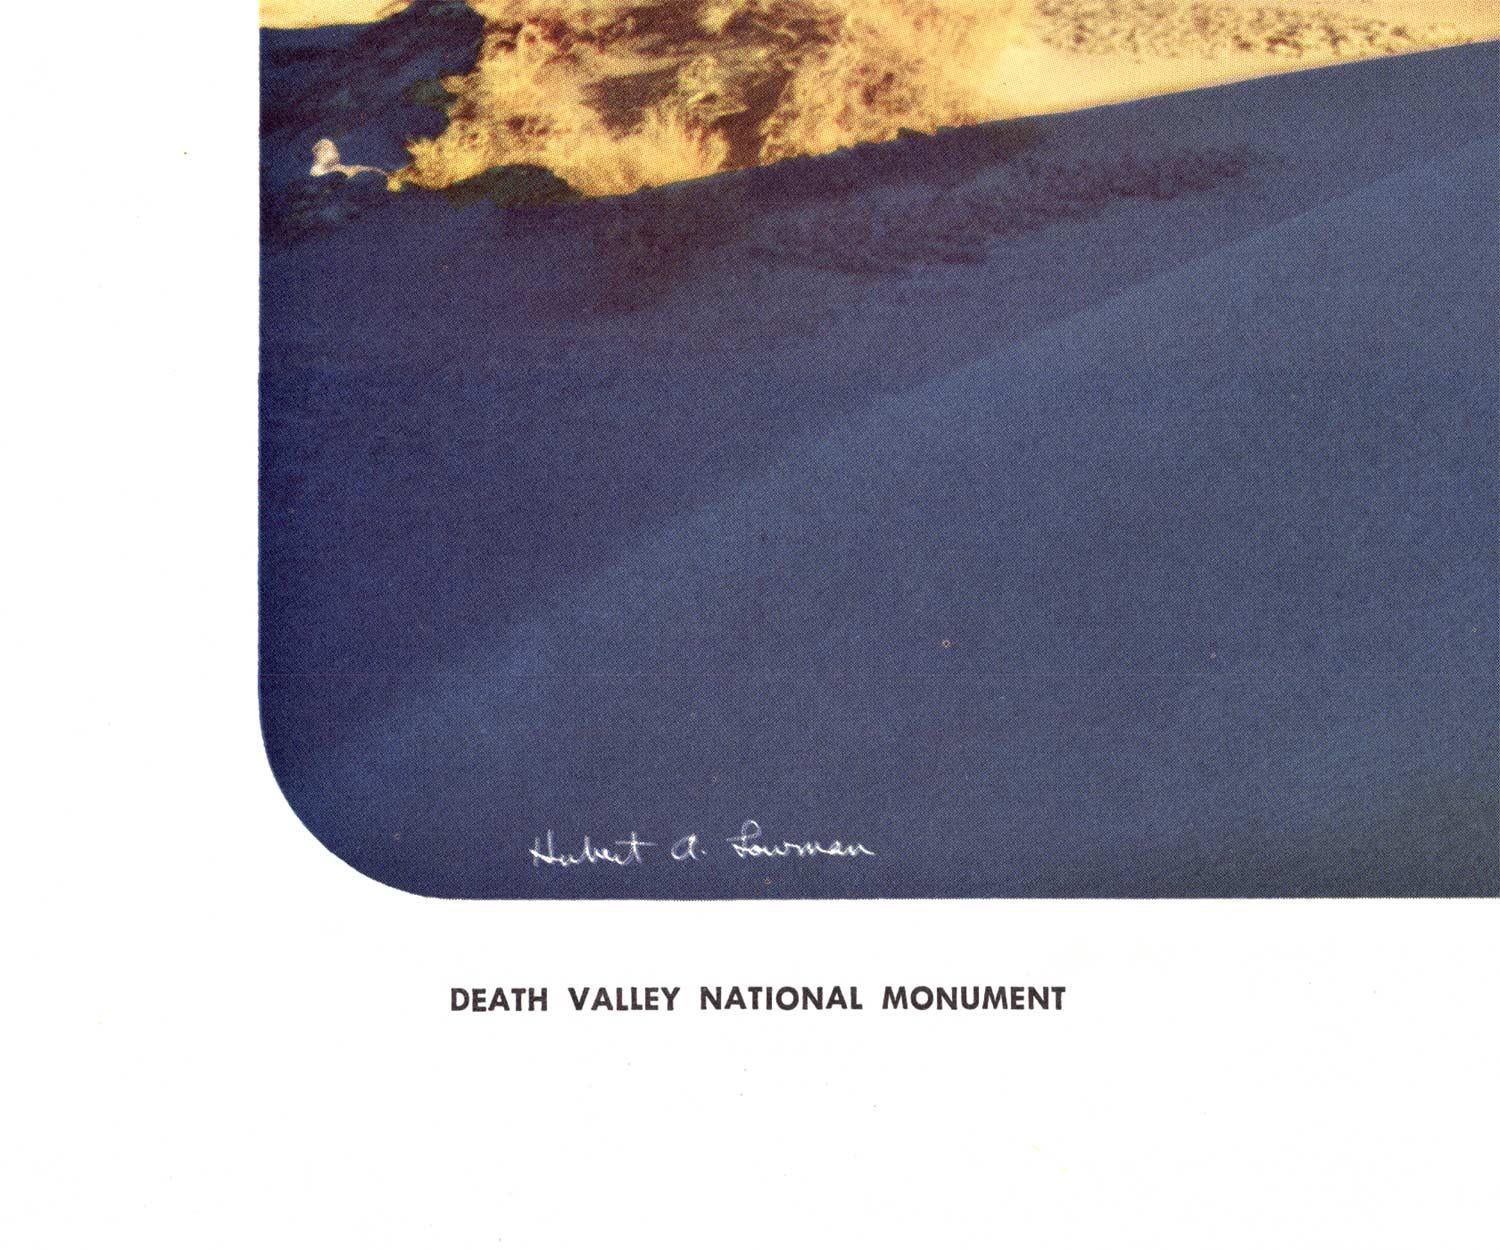 Original-Vintage-Poster, Death Valley National Monument American Airlines – Print von Hubert A. Lowman